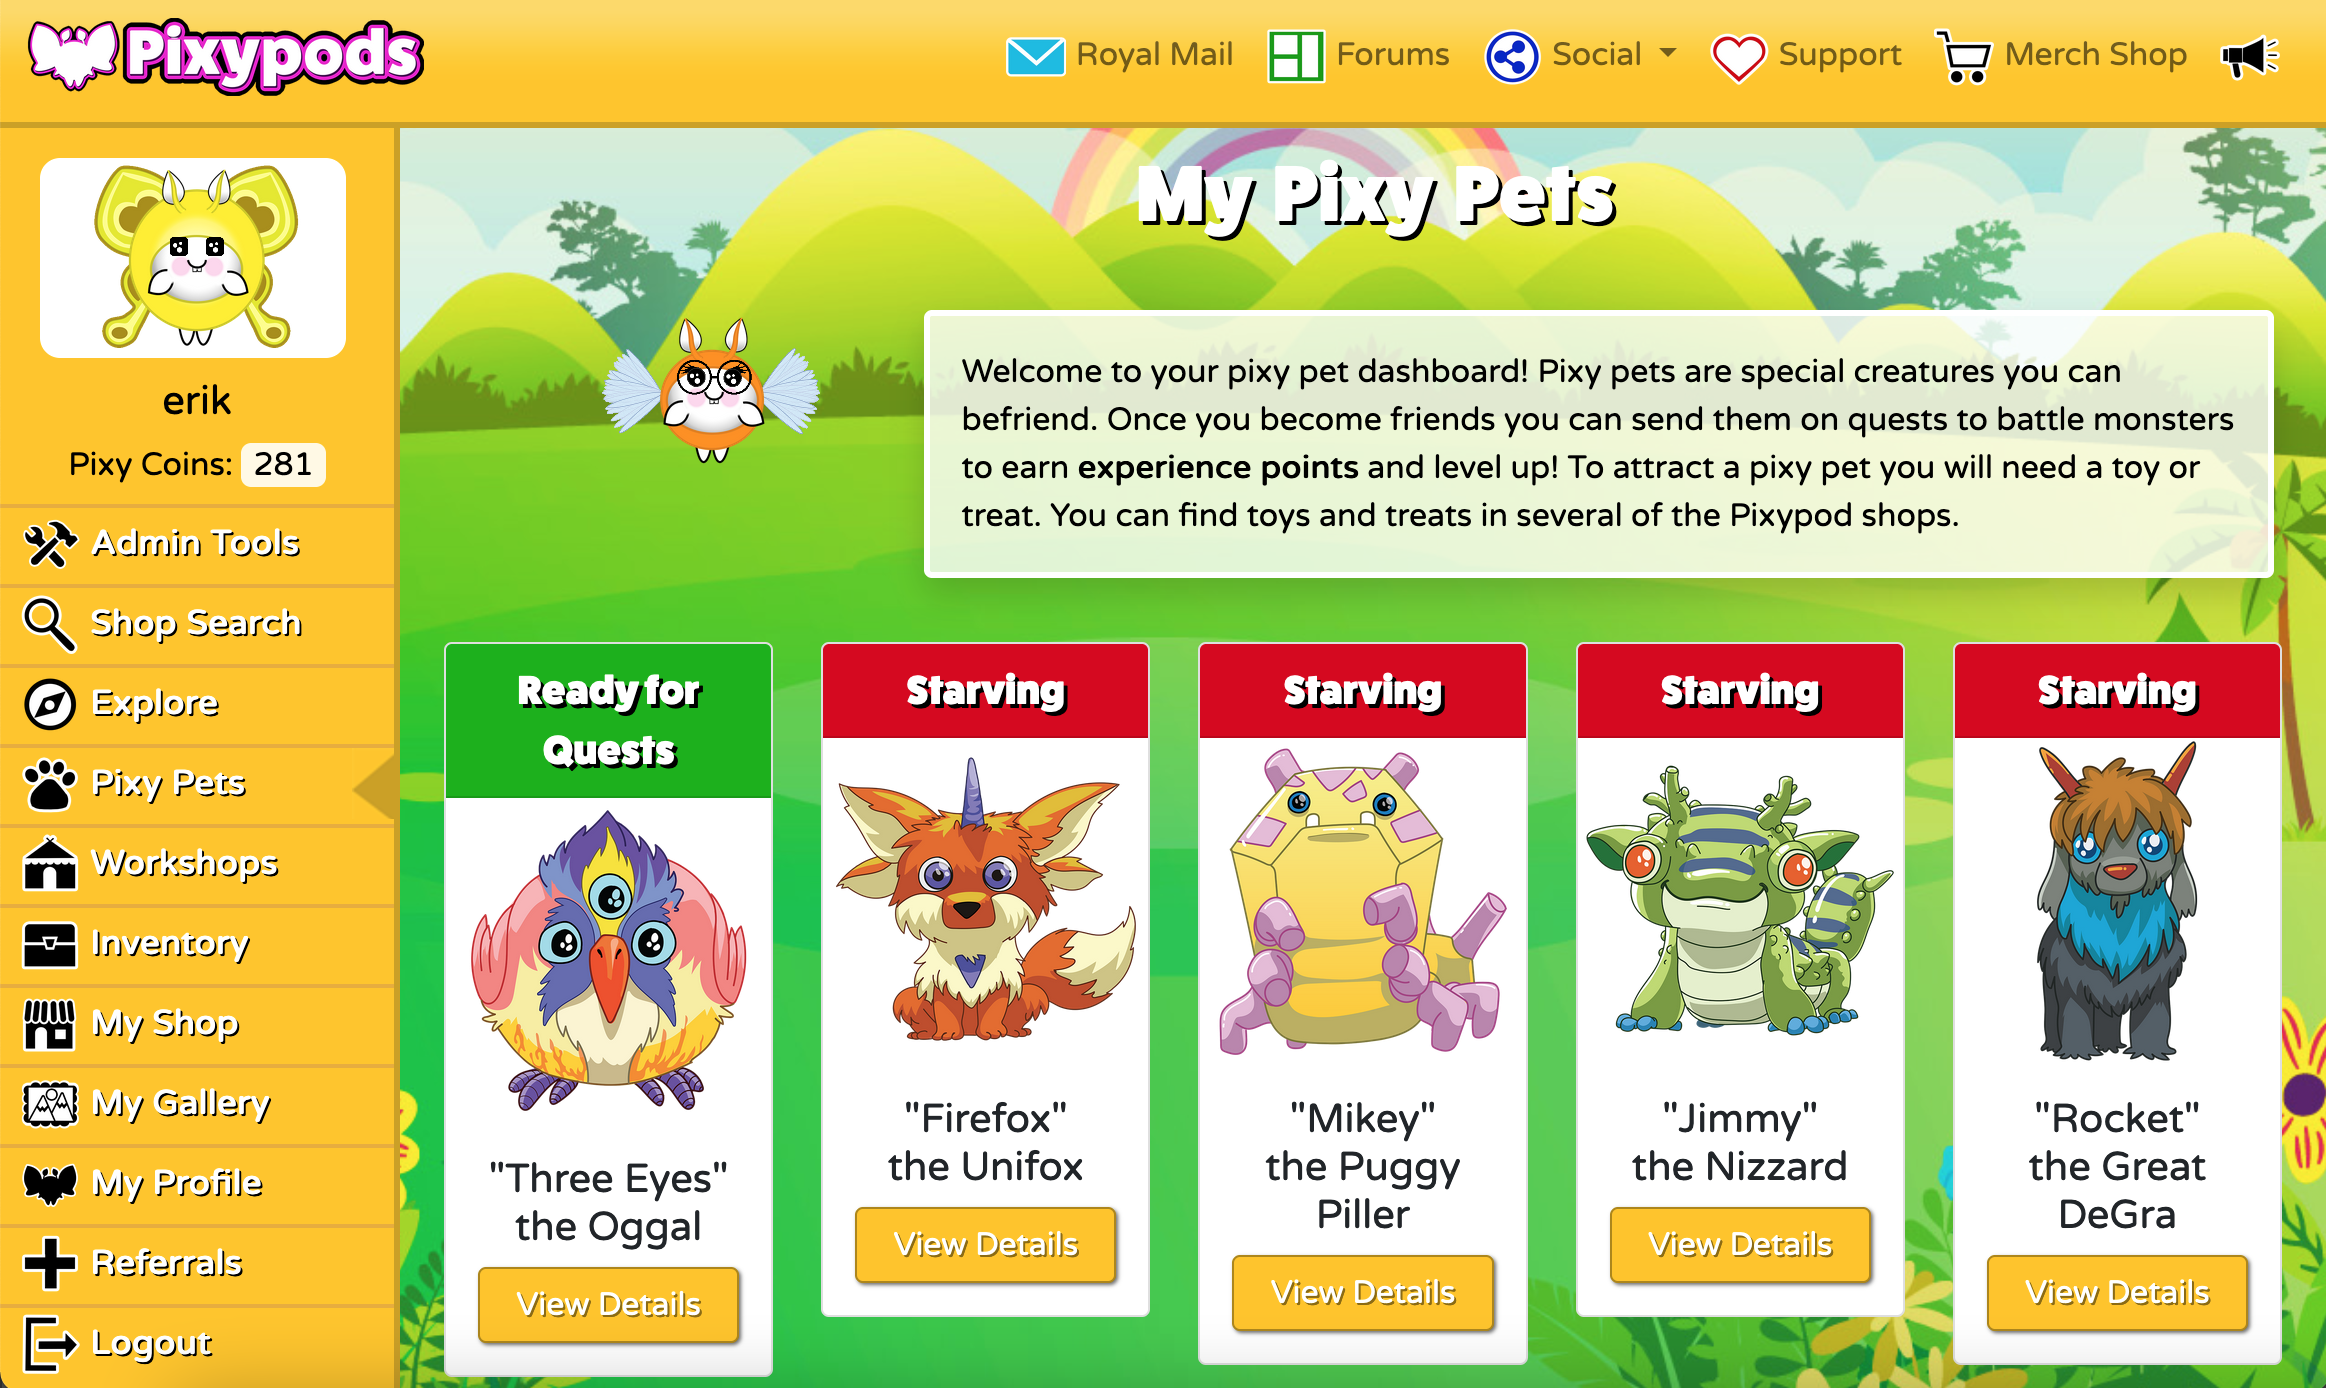 Pixypods at Top Web Games